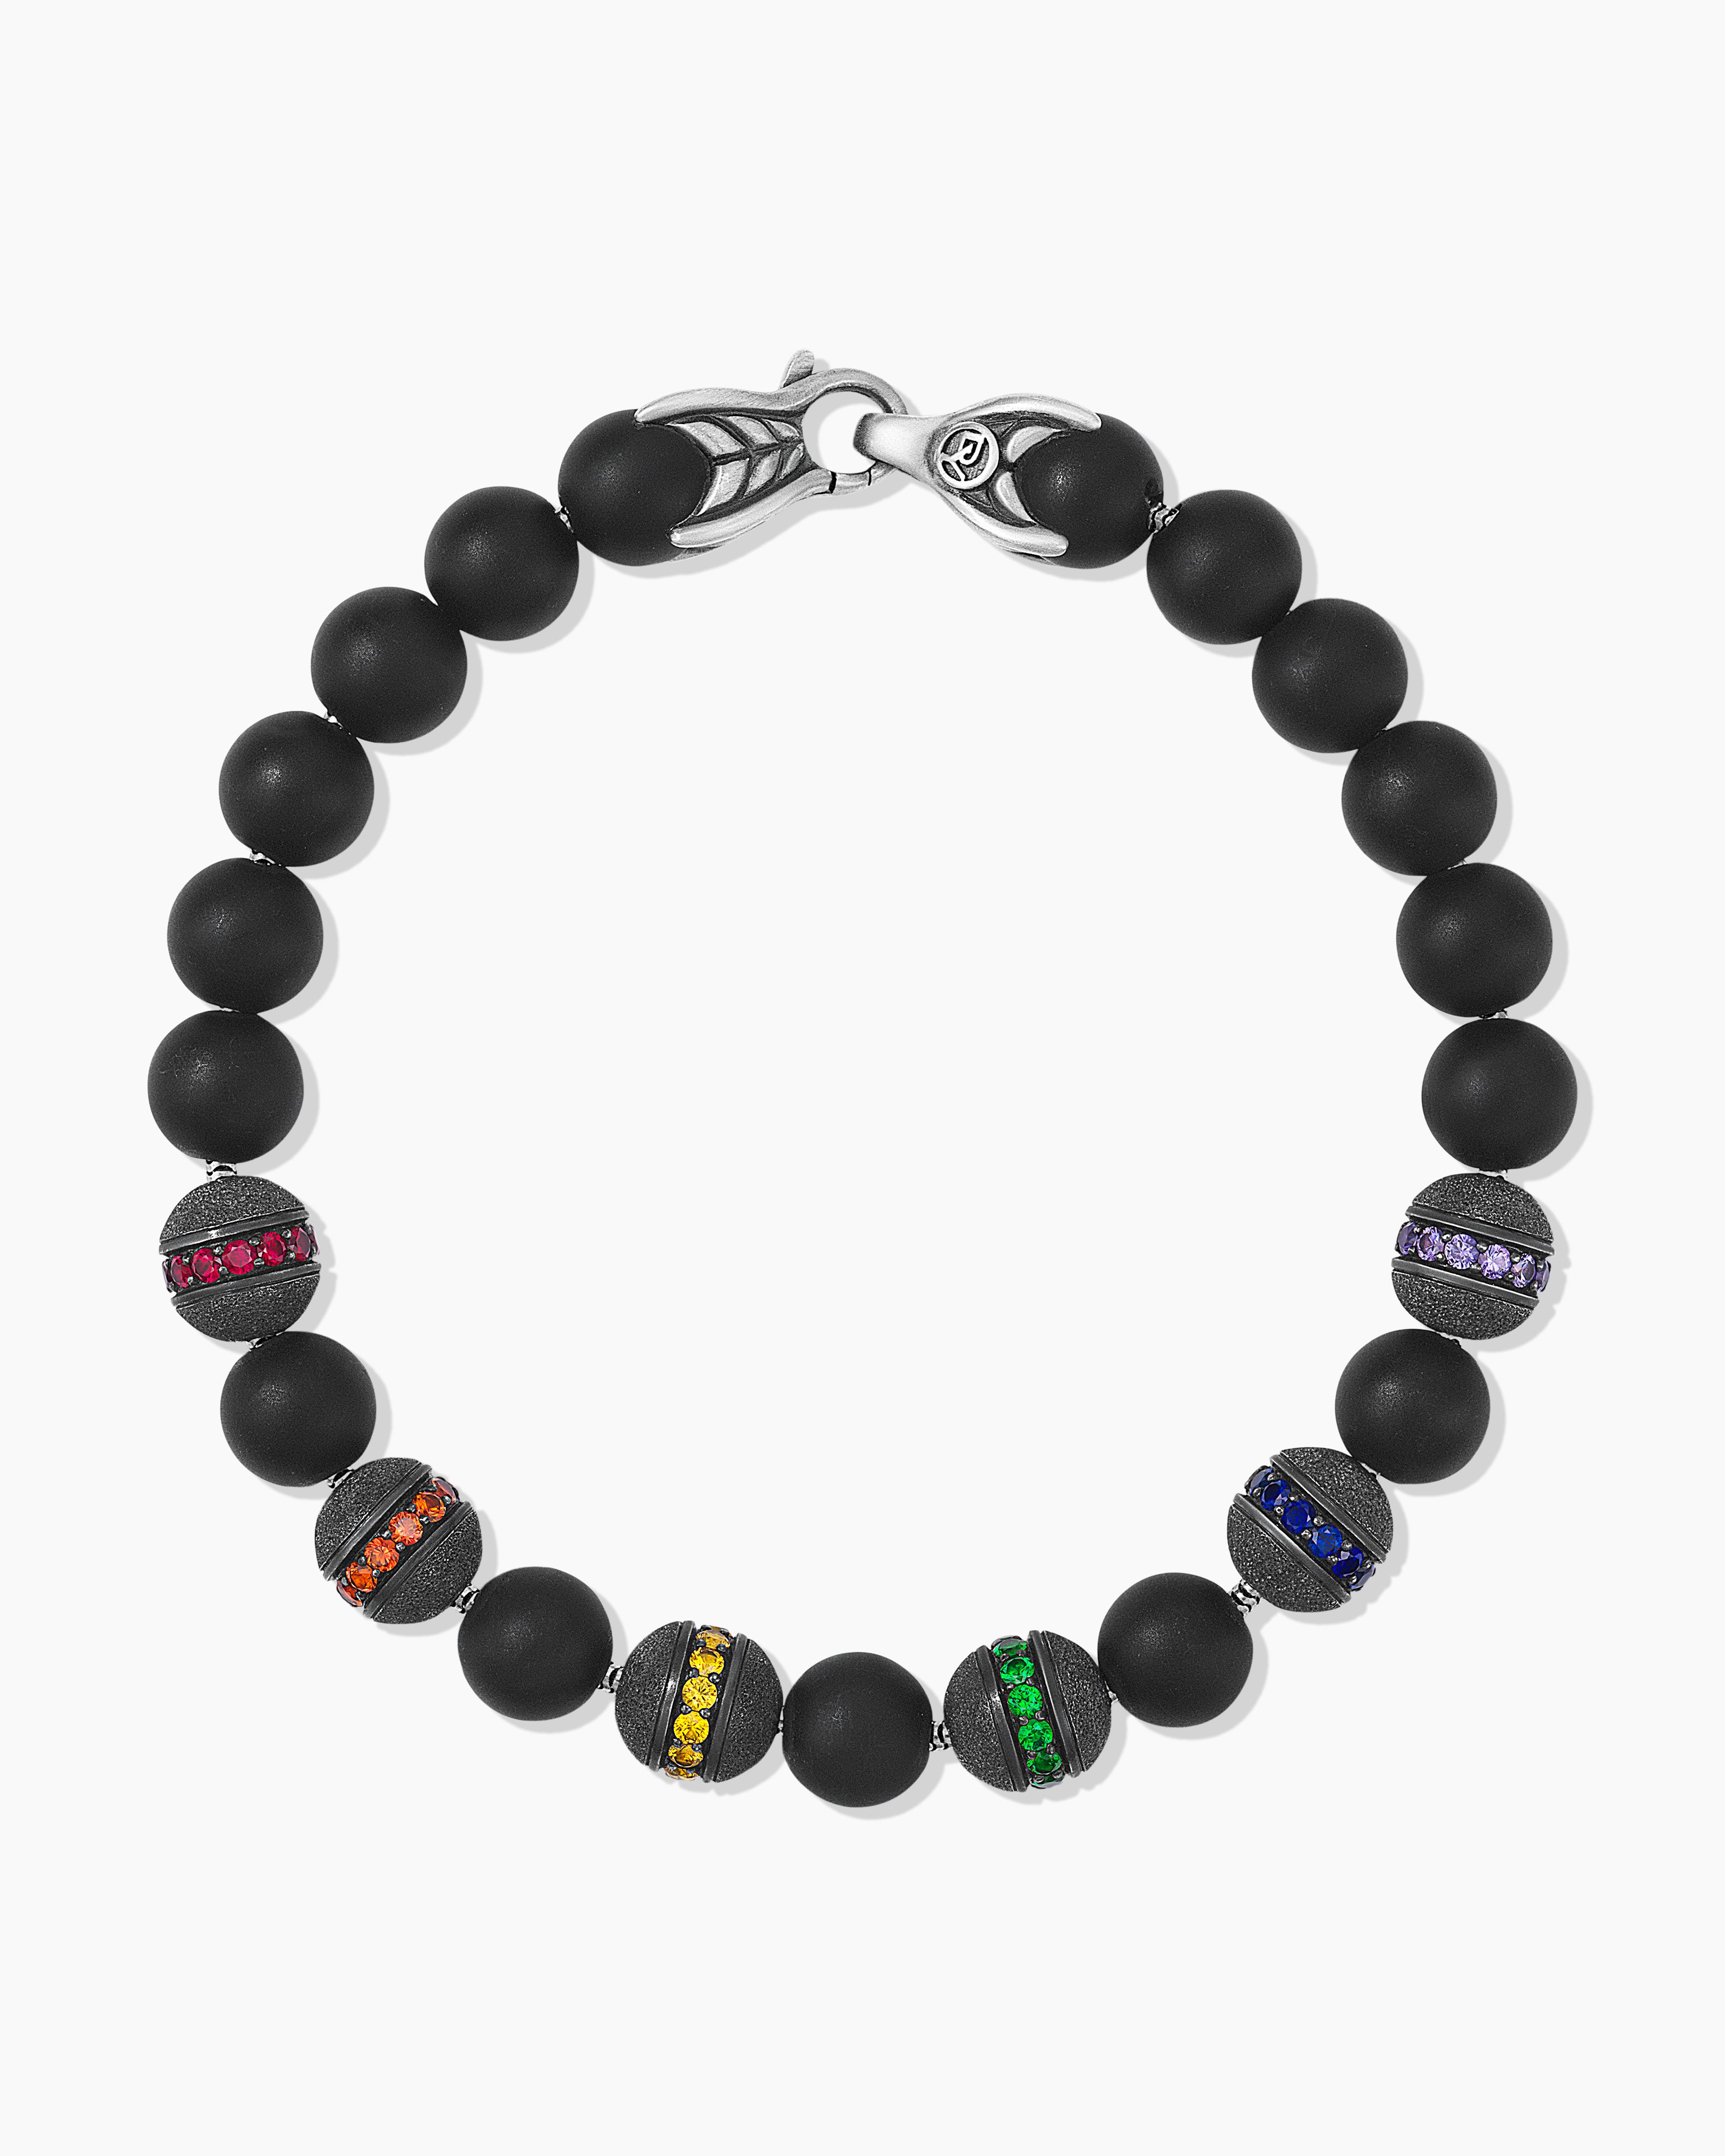 Spiritual Beads Rainbow Bracelet in Sterling Silver, 8mm | David Yurman